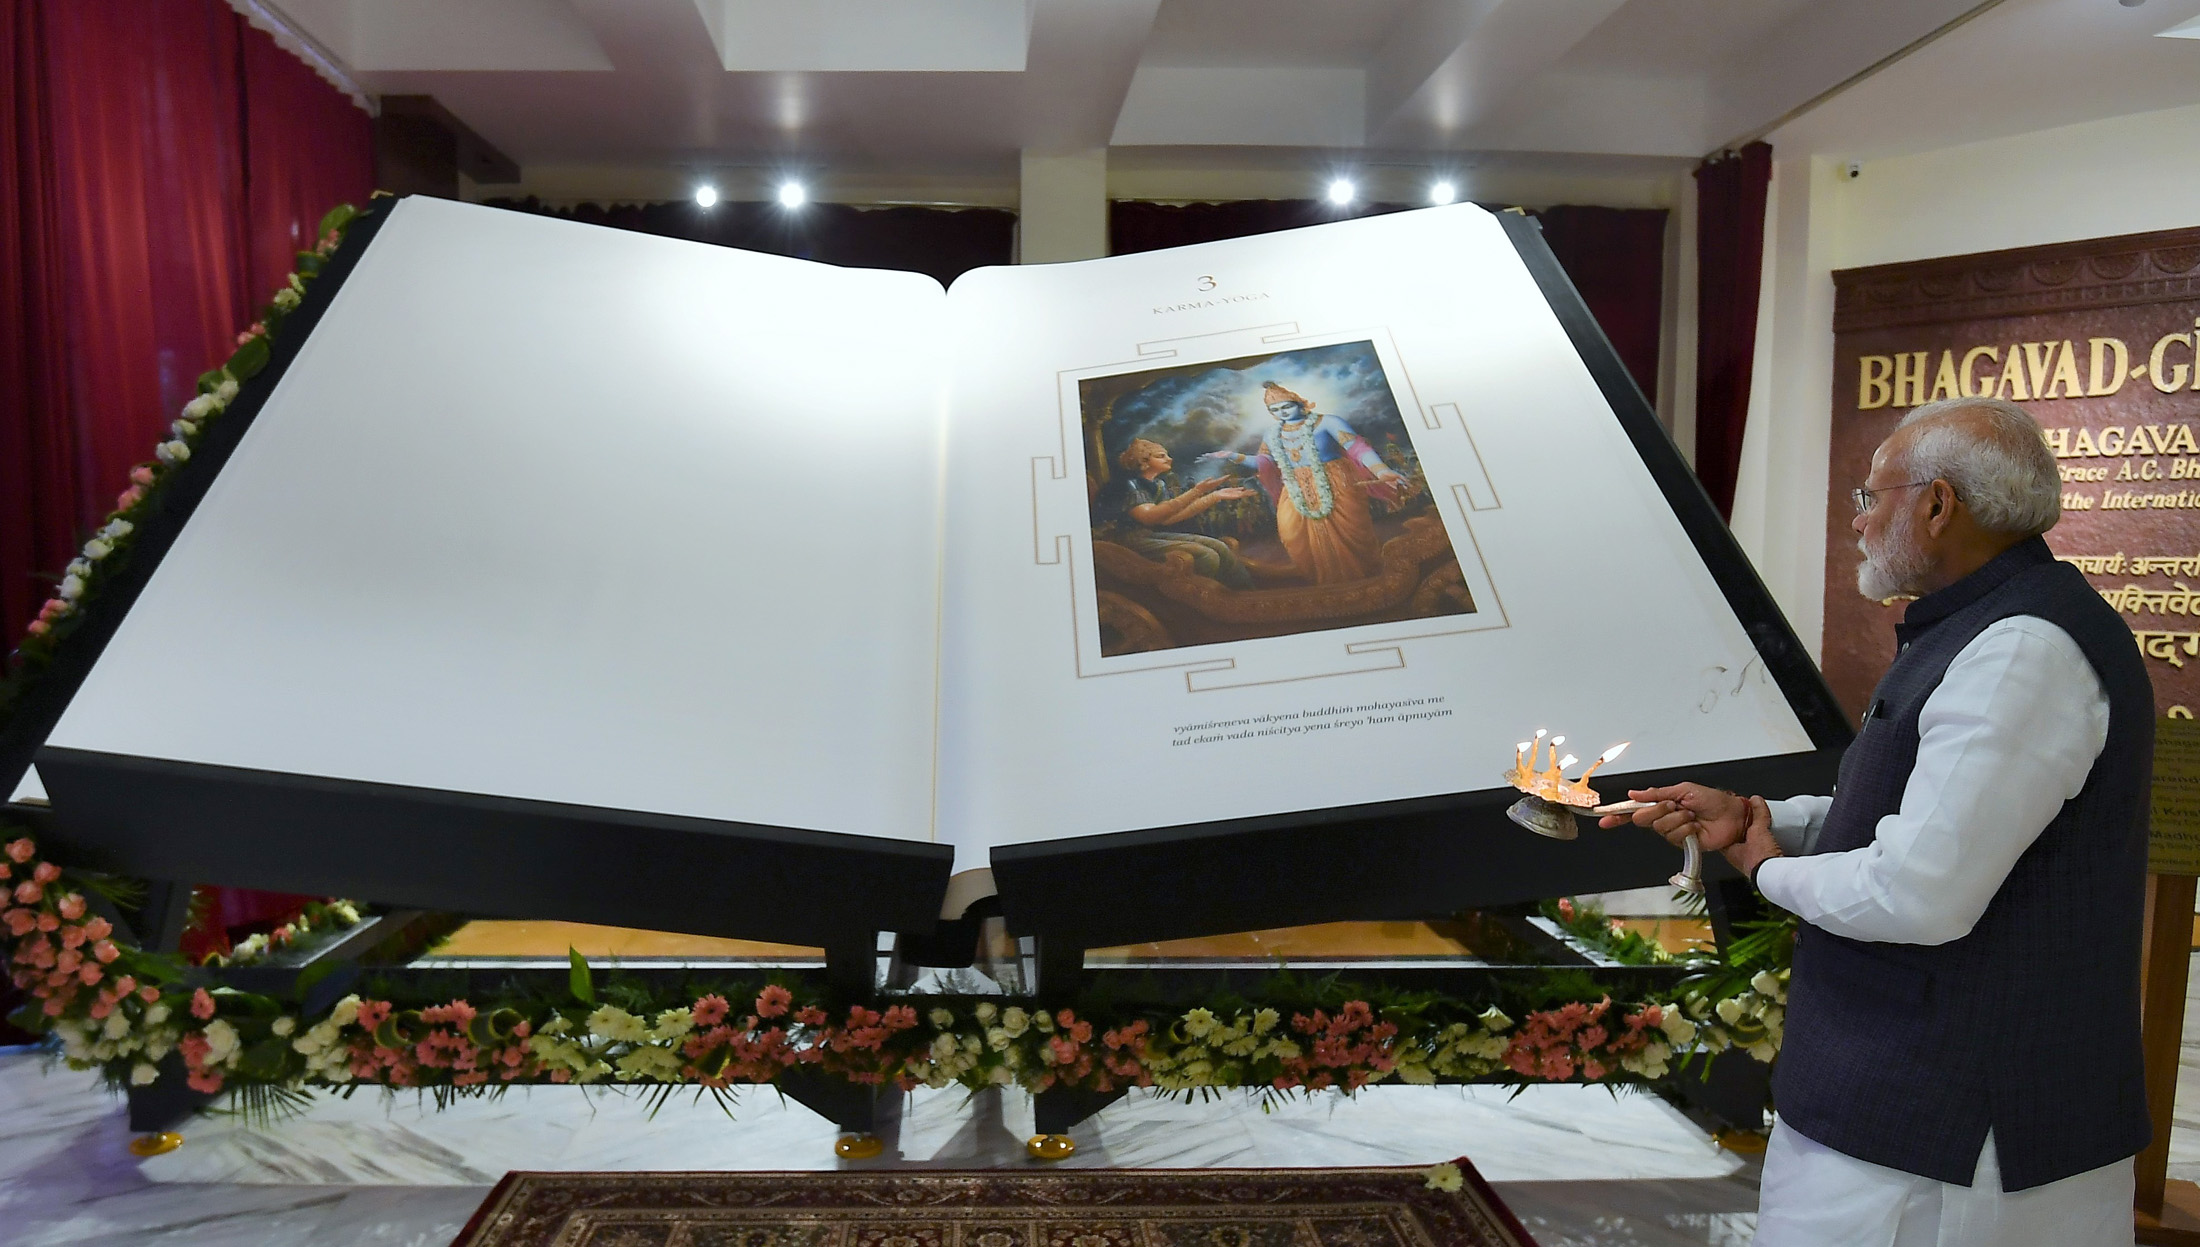 The Prime Minister, Shri Narendra Modi unveils the Bhagwad Gita, prepared by ISKCON devotees to the world, at the Gita Aradhana Mahotsav, at ISKCON Temple, in New Delhi on February 26, 2019.